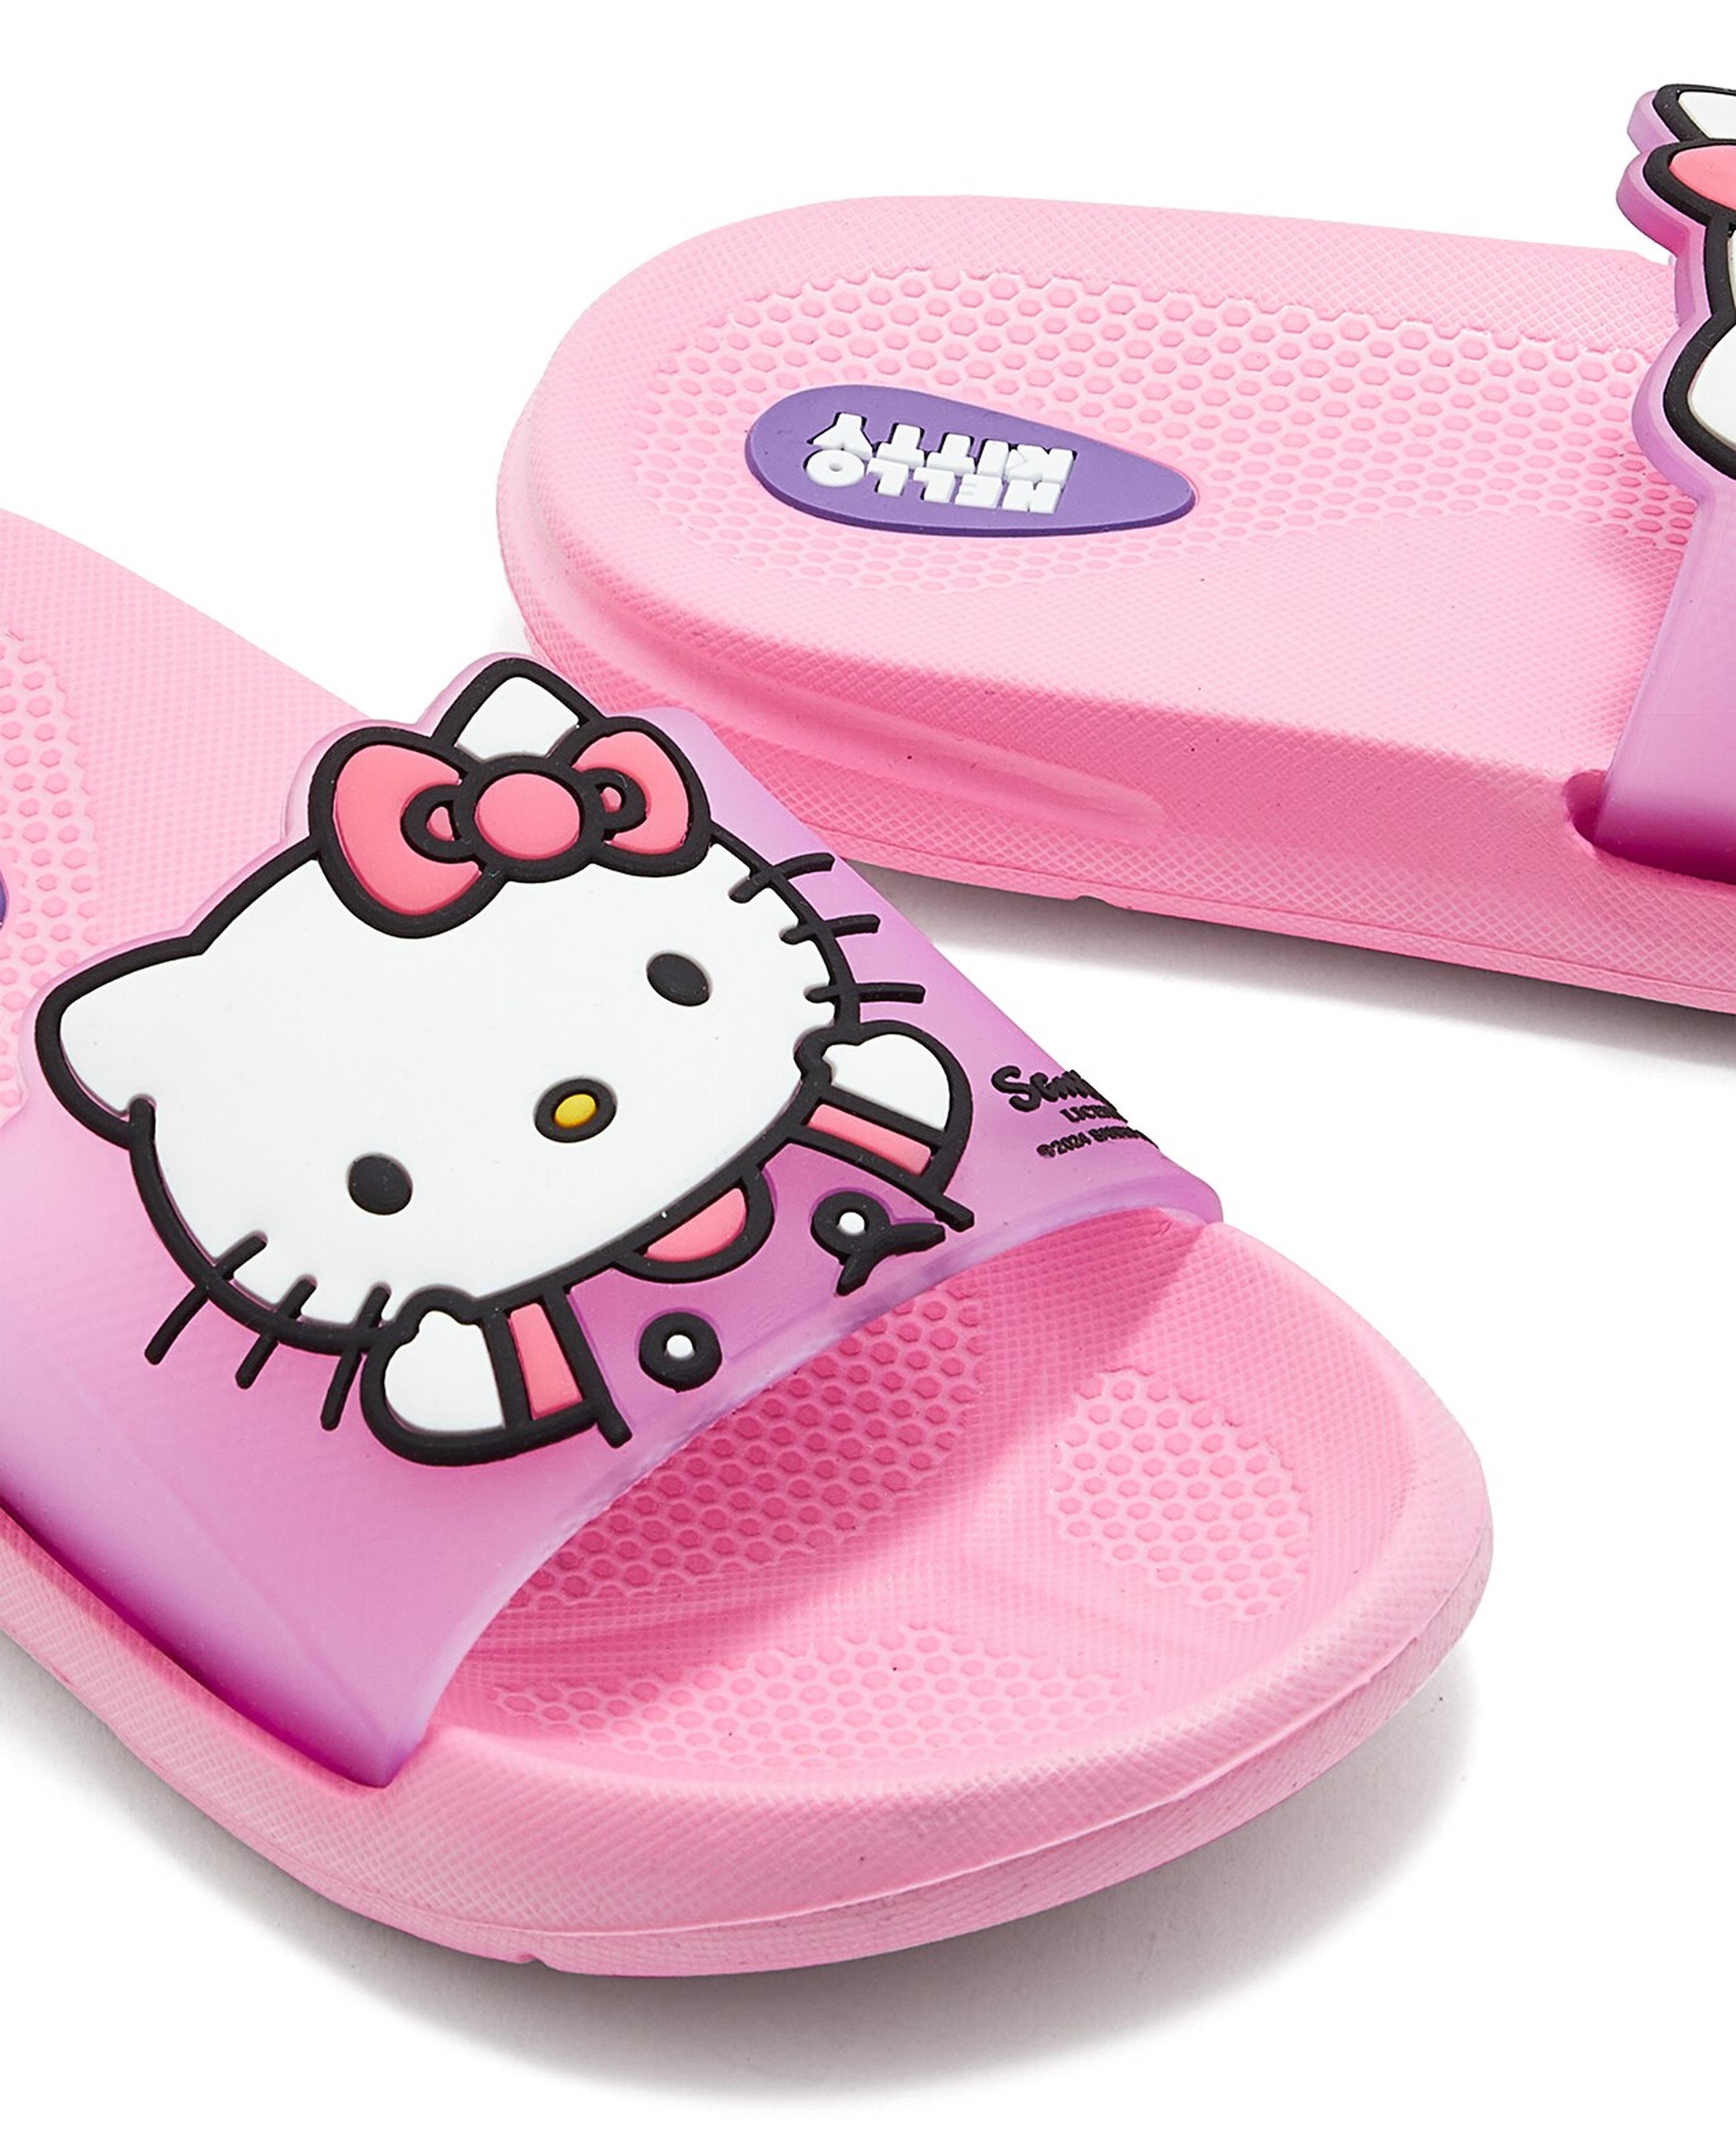 Hello Kitty Slides